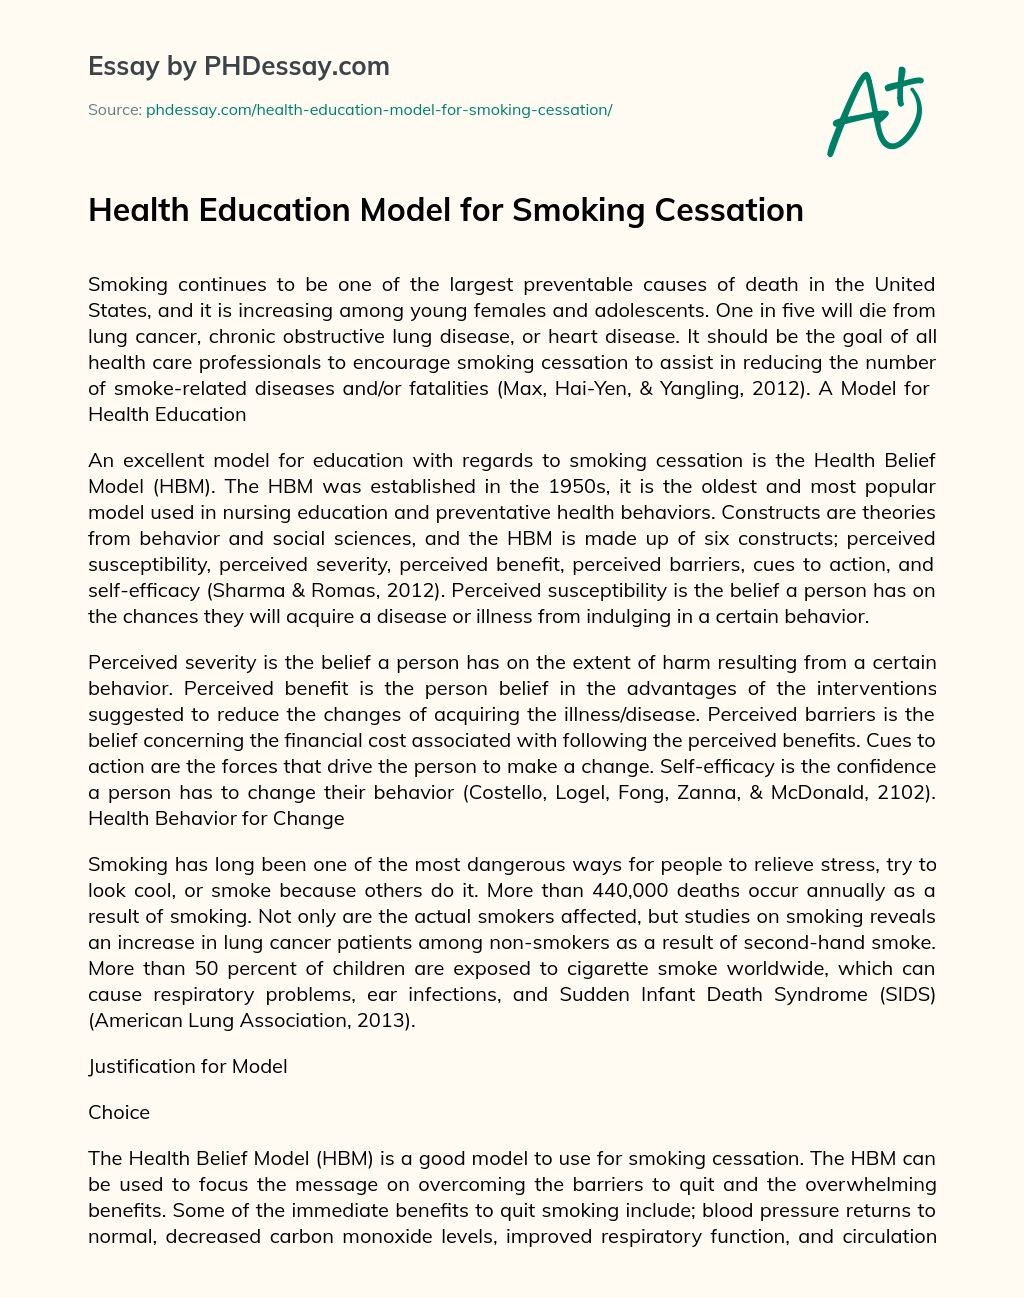 Health Education Model for Smoking Cessation essay